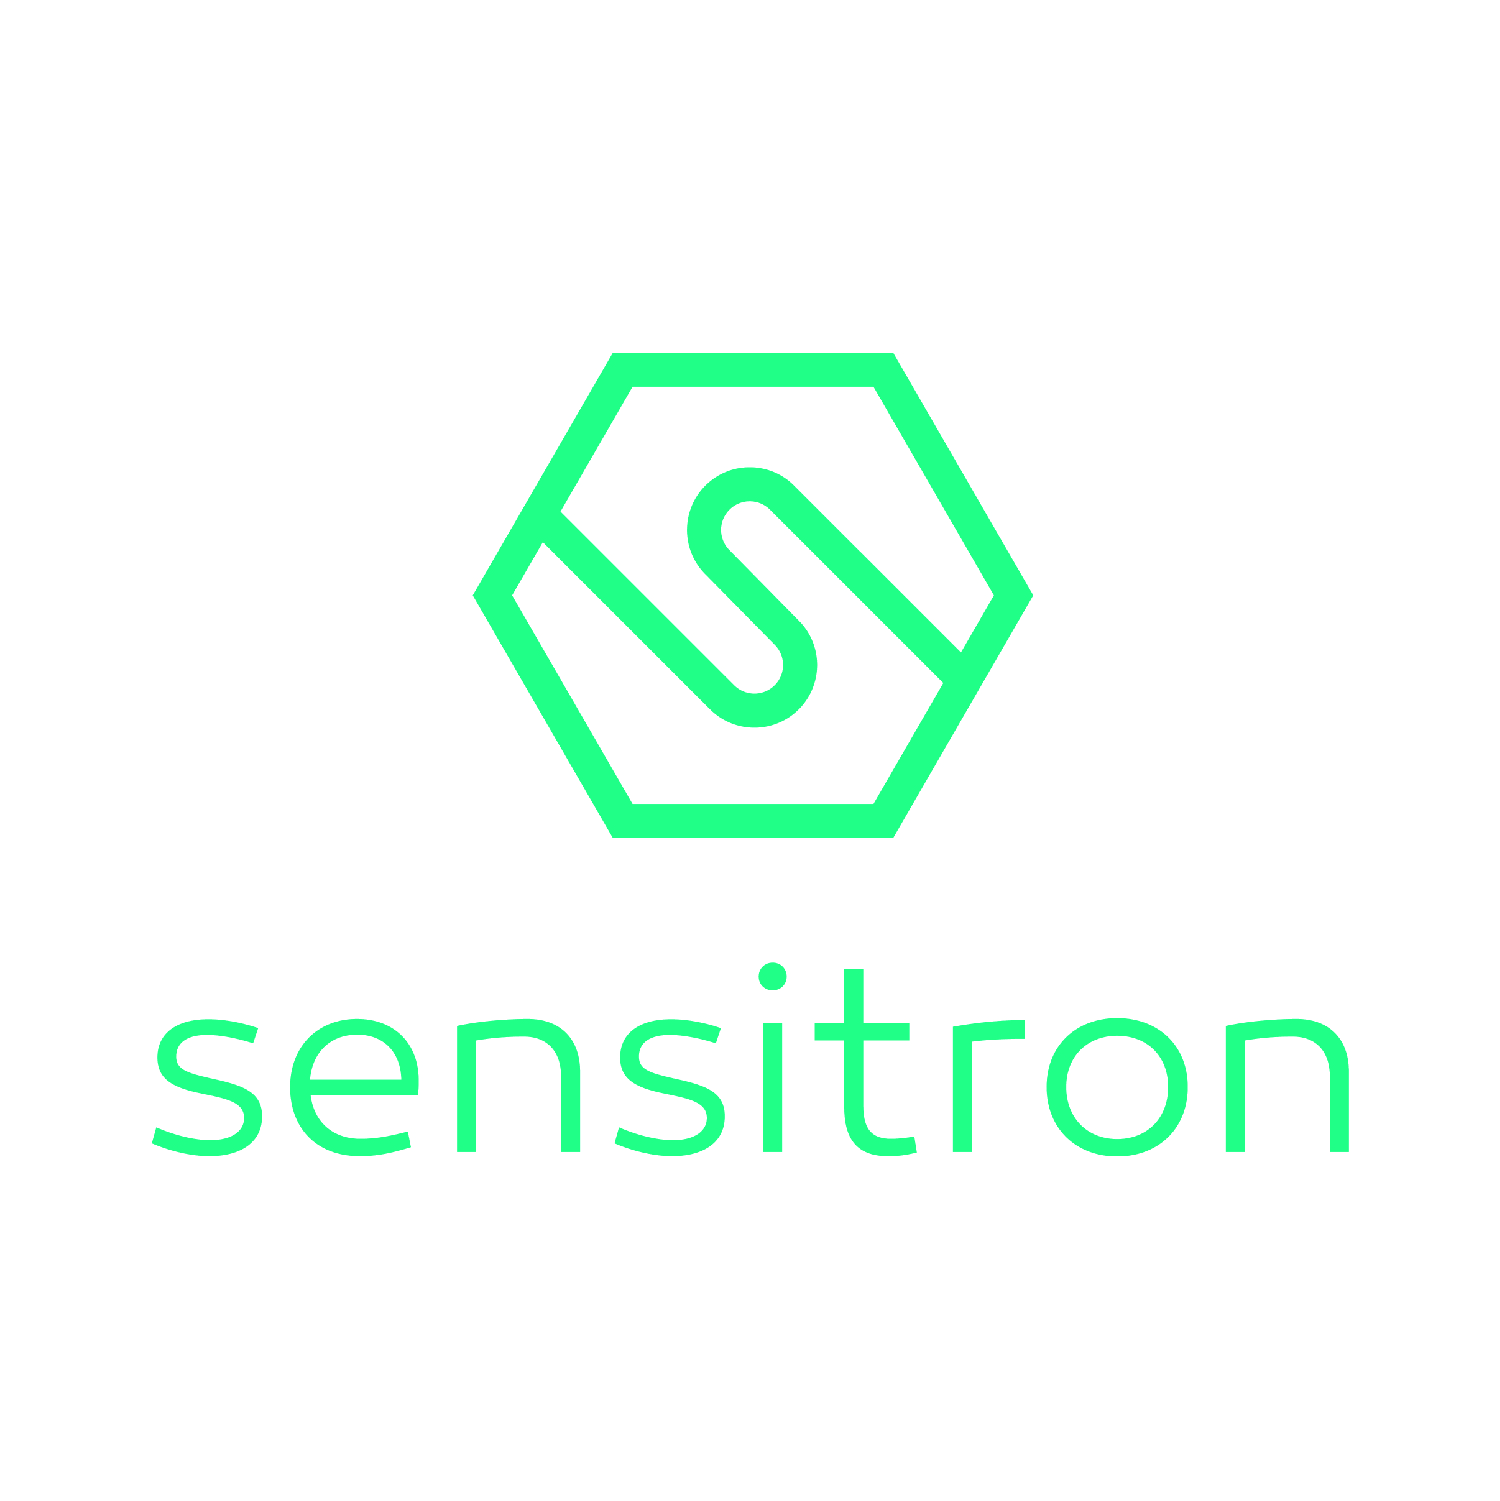 Sensitron